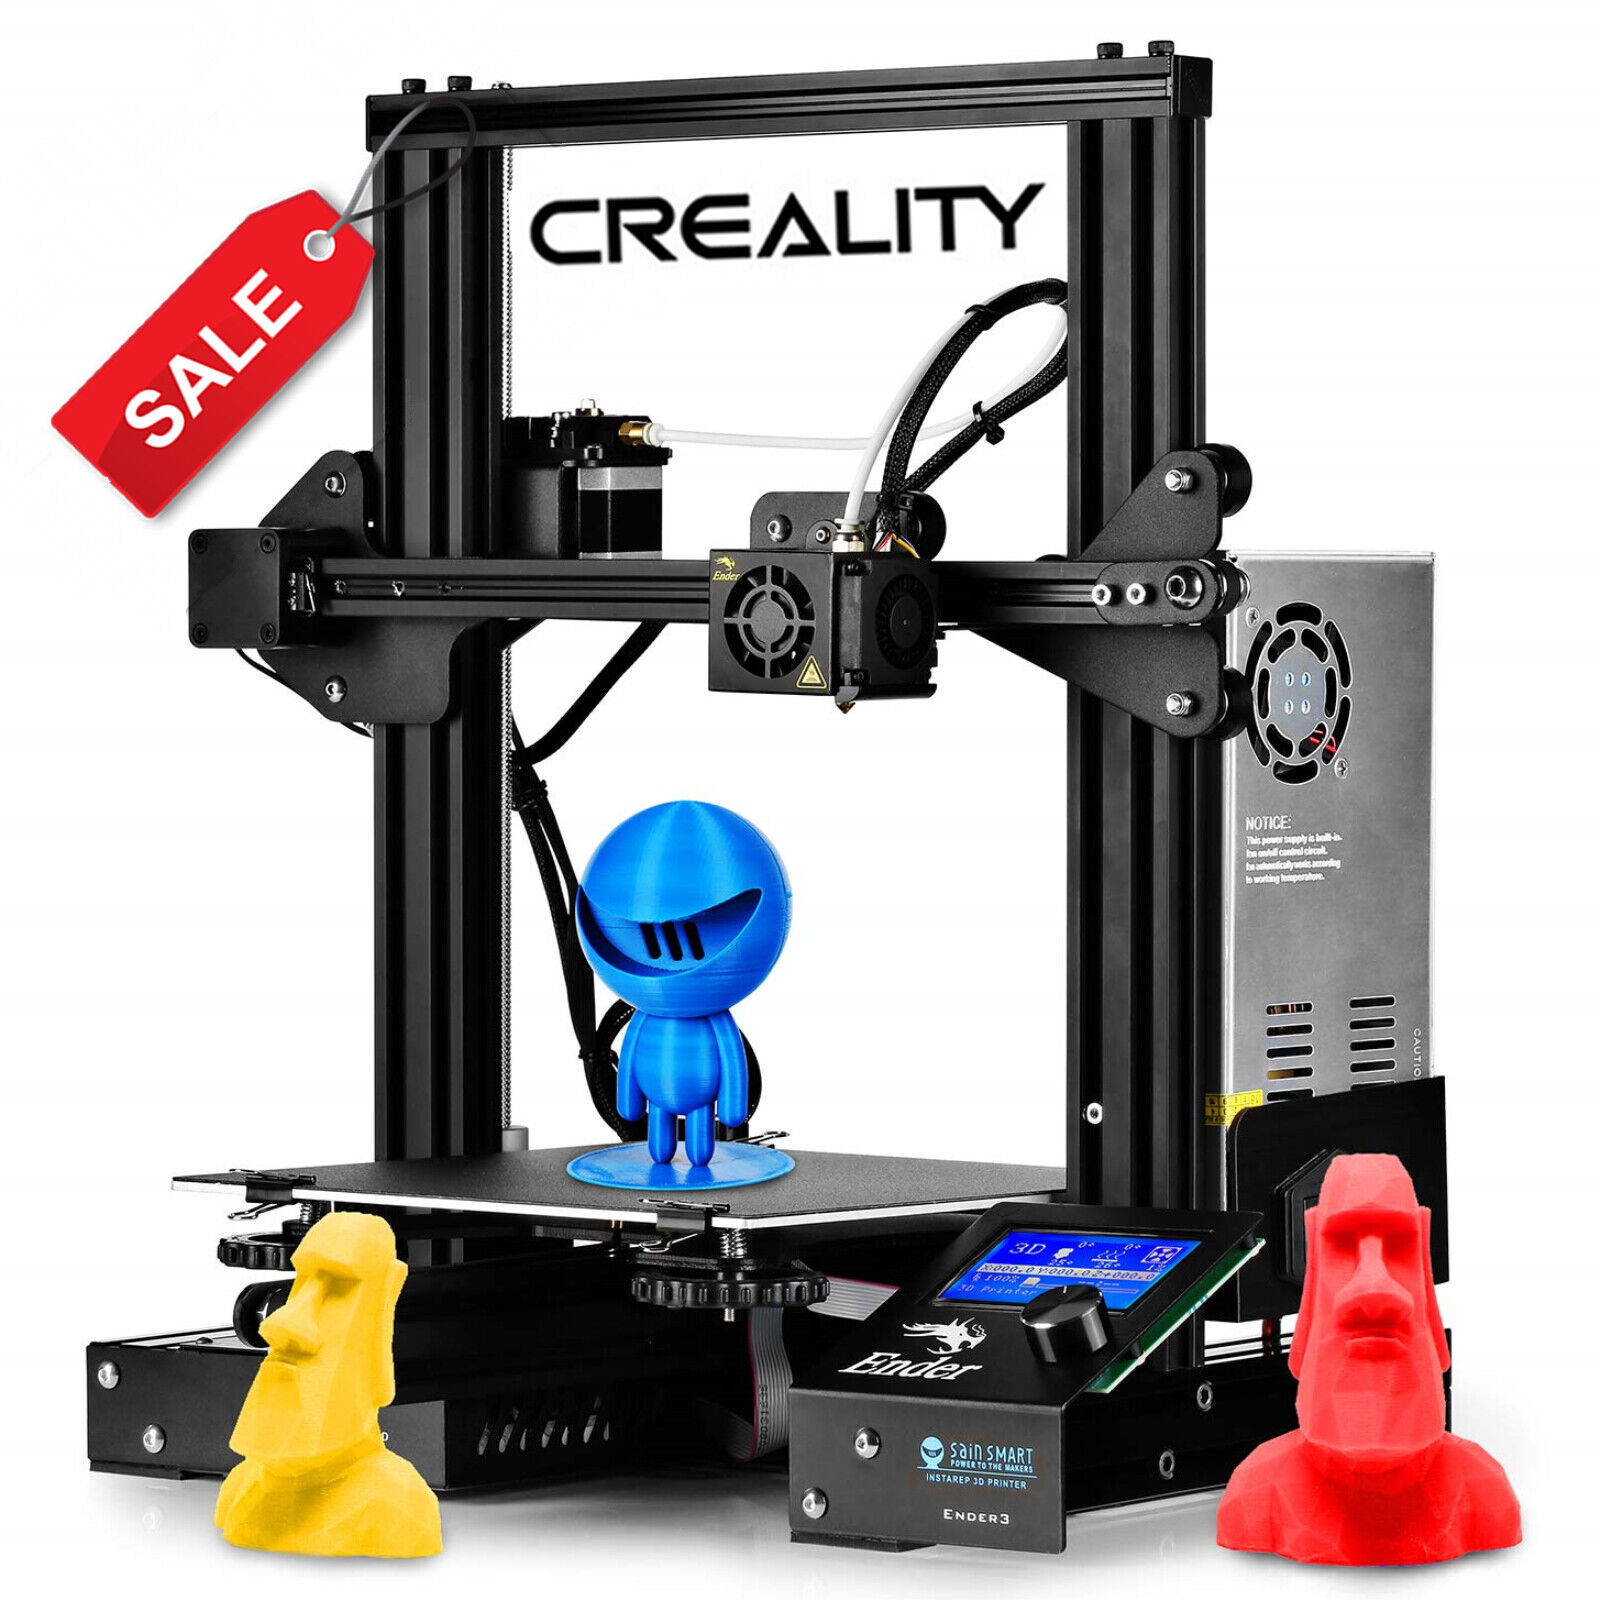 CREALITY Ender 3V2/Max/Ender 3 V2 3D Printer 220X220X250mm 1.75mm /PLA LOT